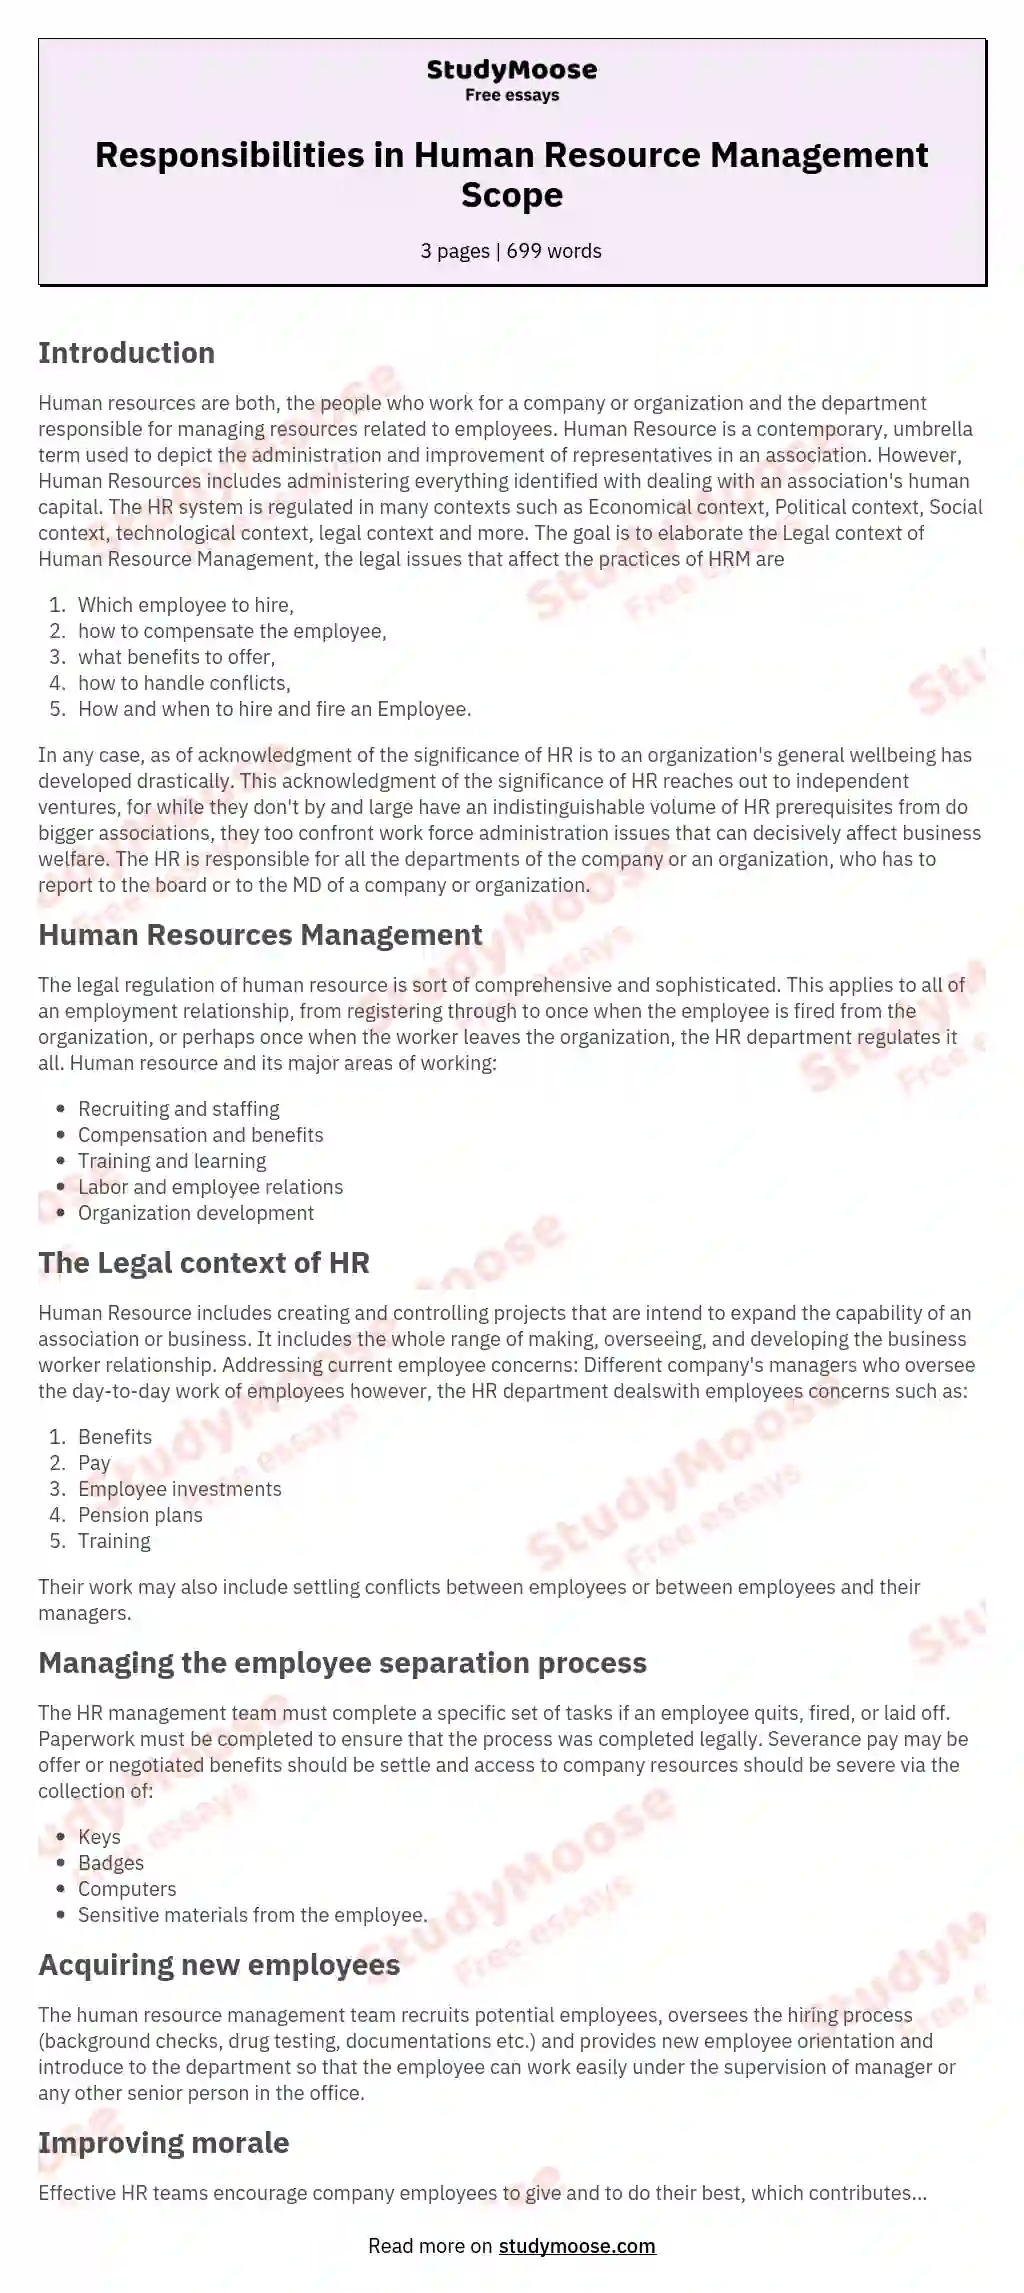 Responsibilities in Human Resource Management Scope essay